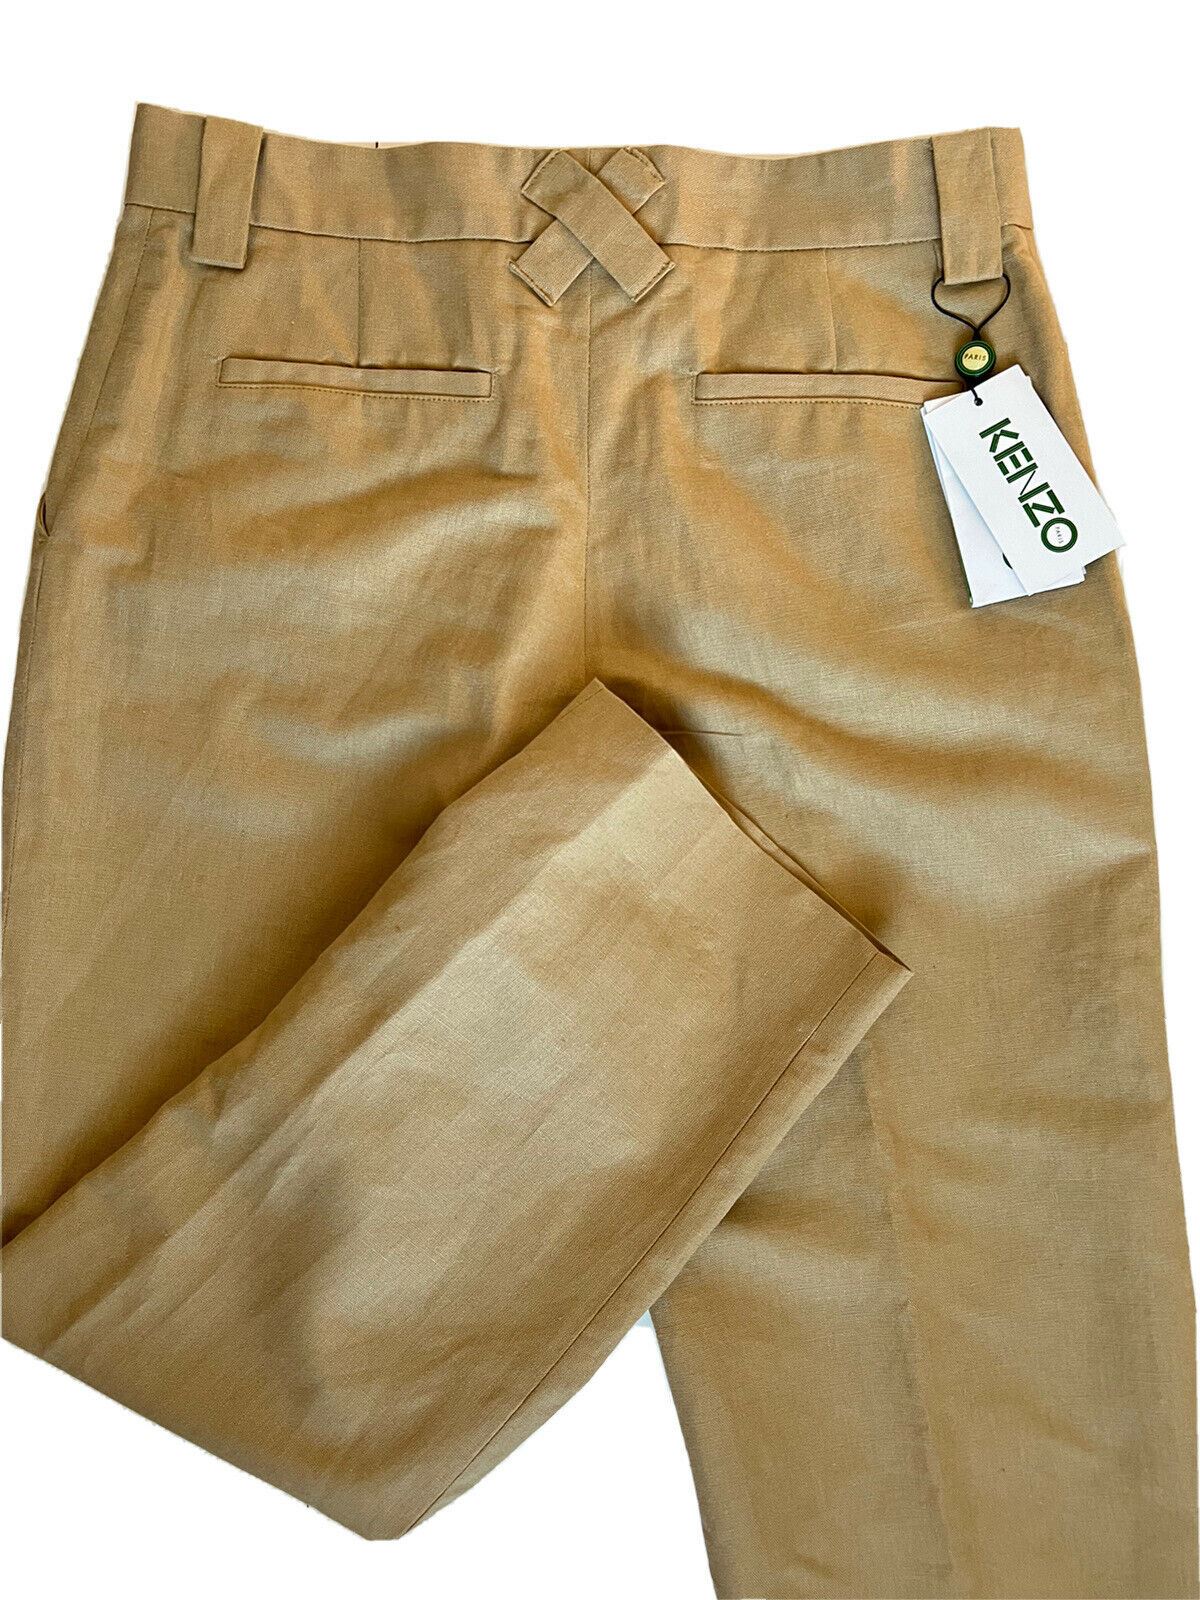 NWT $325 Kenzo Men's Dark Beige Casual Linen Pants Size 32 US (48 Euro)